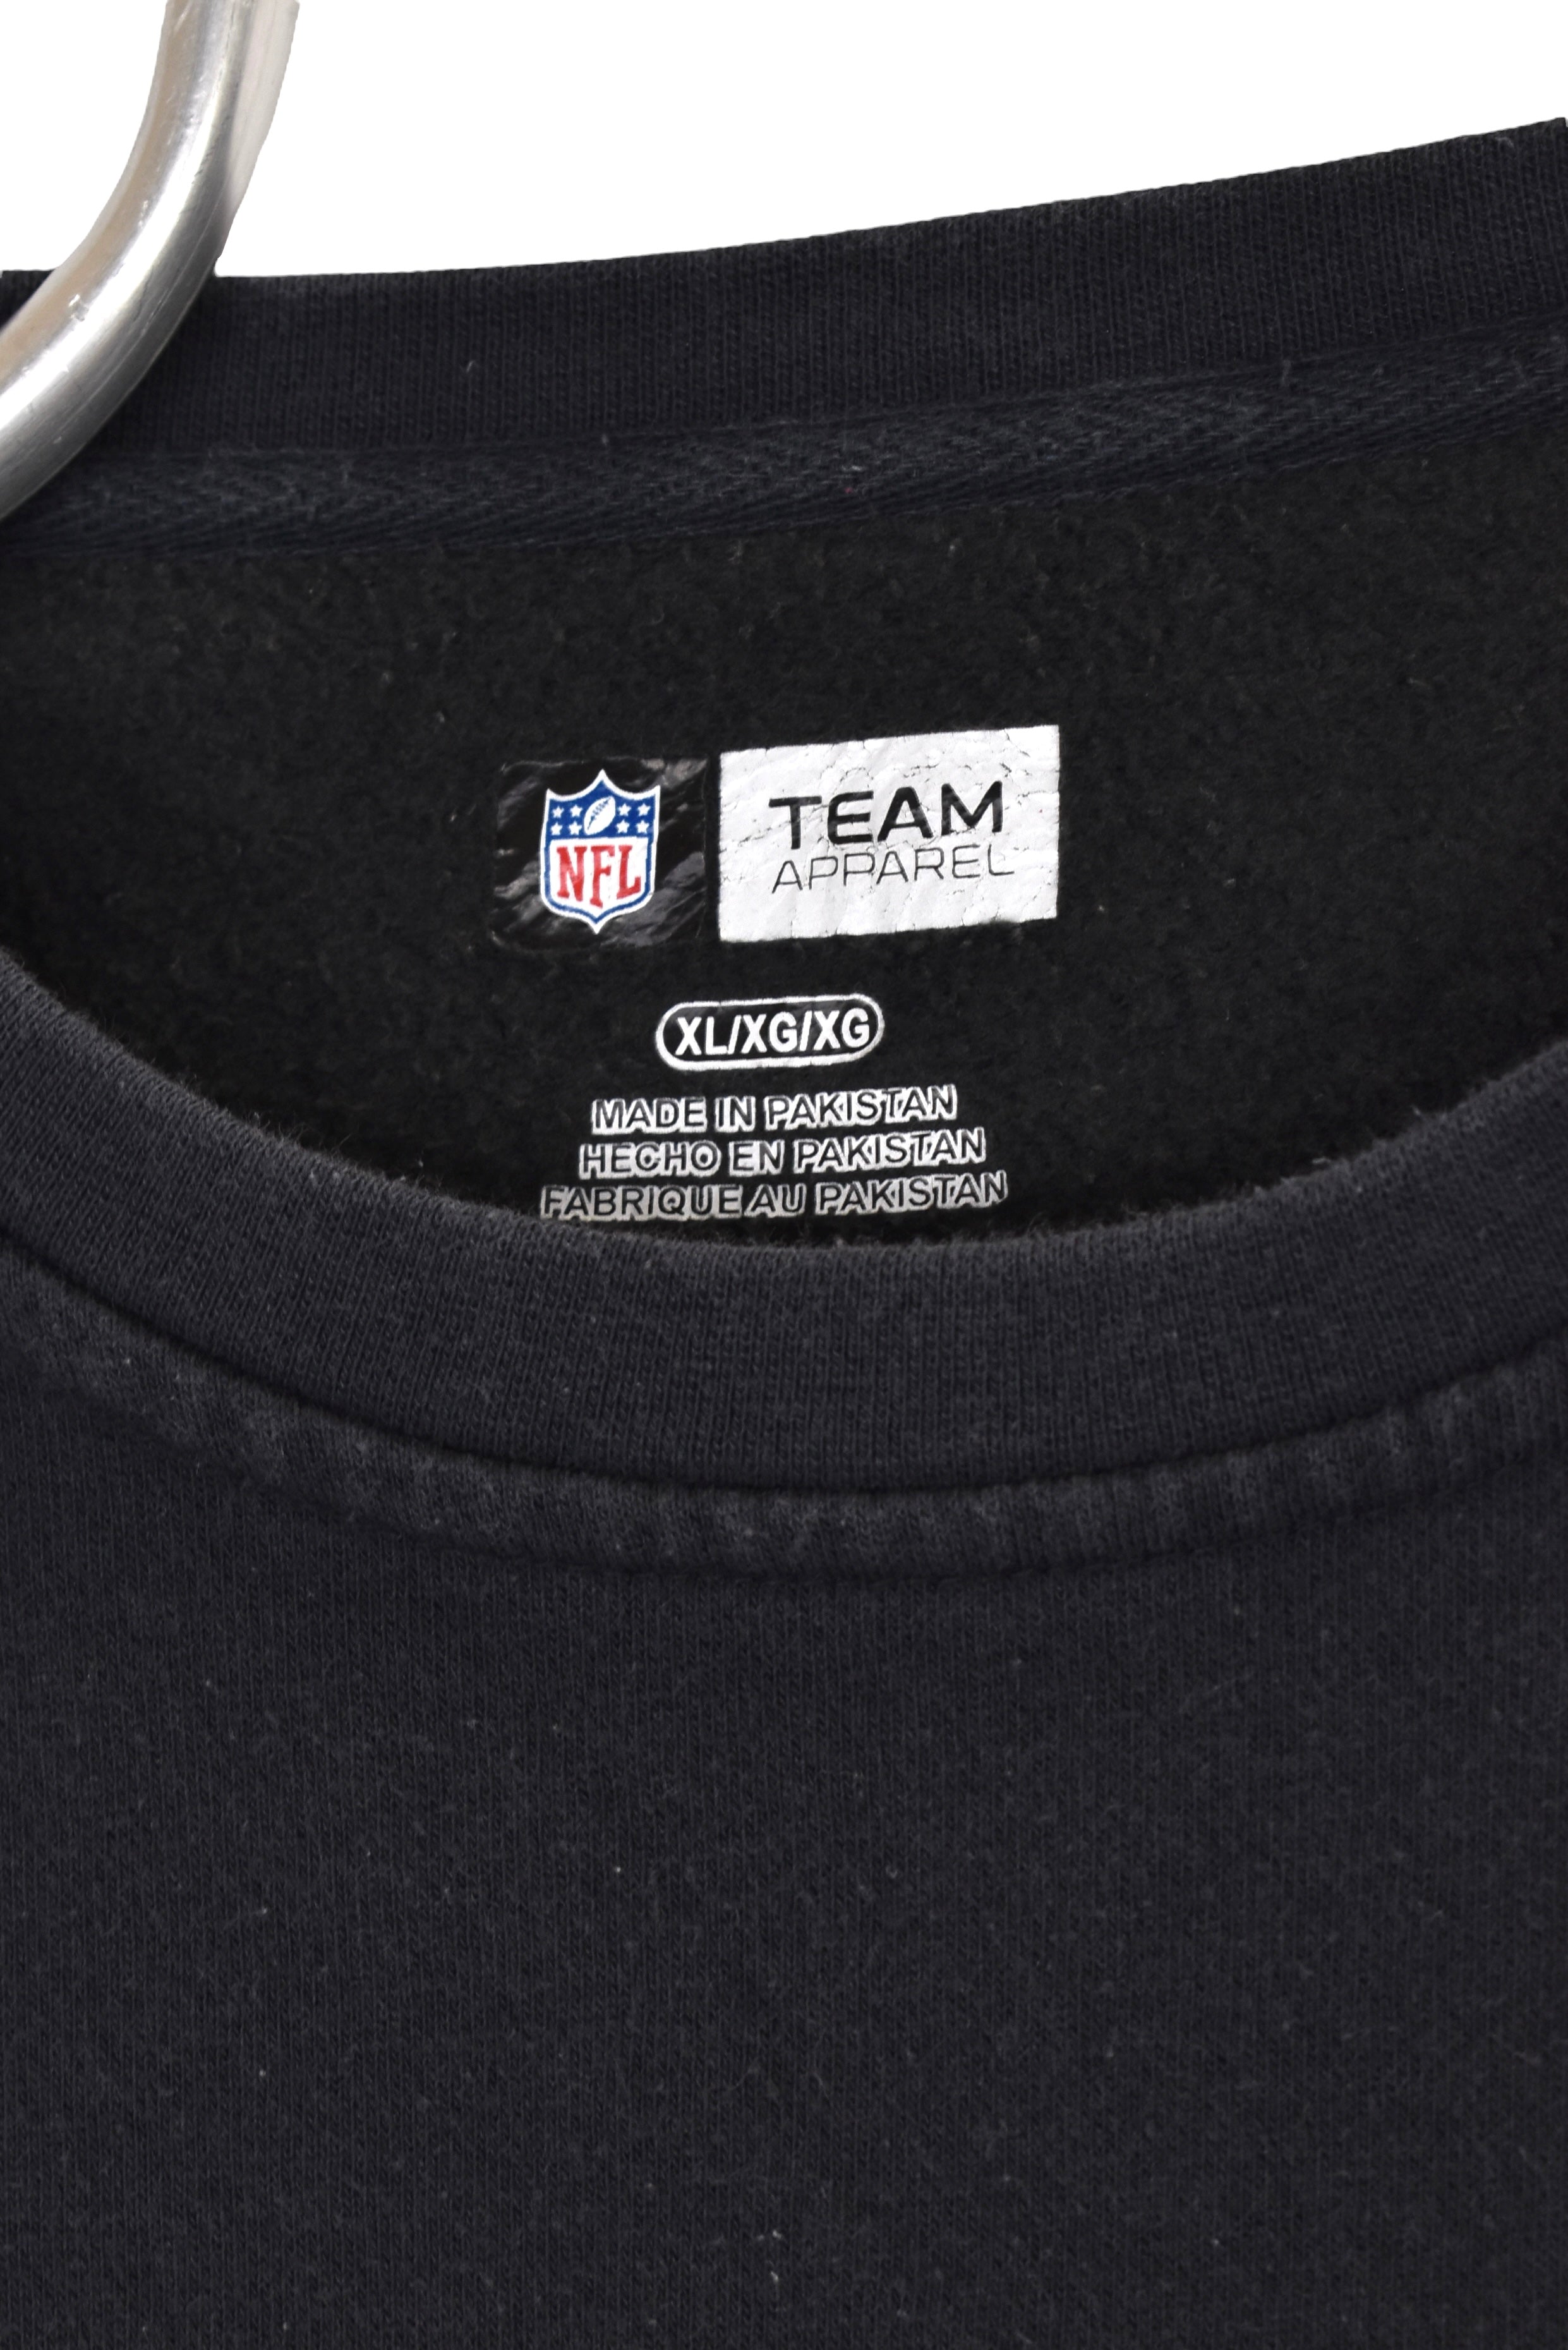 Vintage Pittsburgh Steelers sweatshirt (XL), black NFL embroidered crewneck